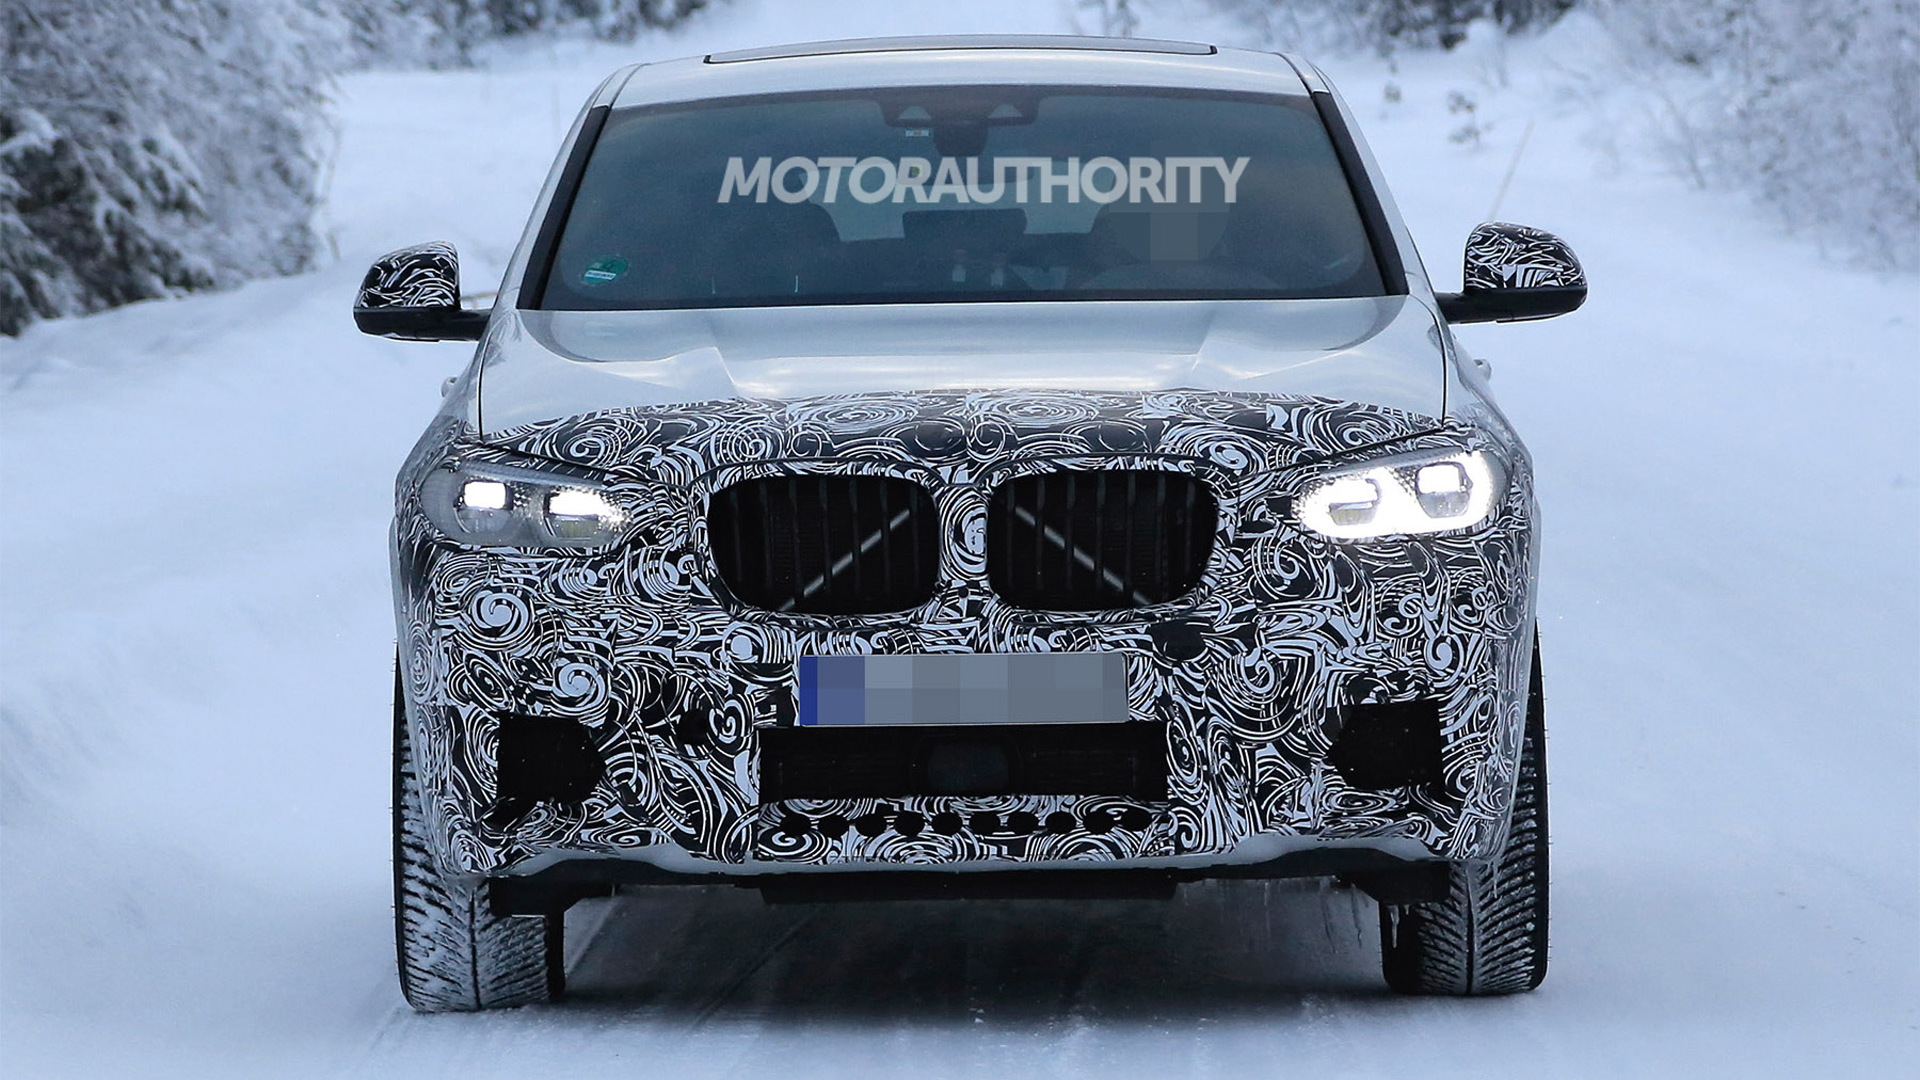 2019 BMW X4 M spy shots - Image via S. Baldauf/SB-Medien